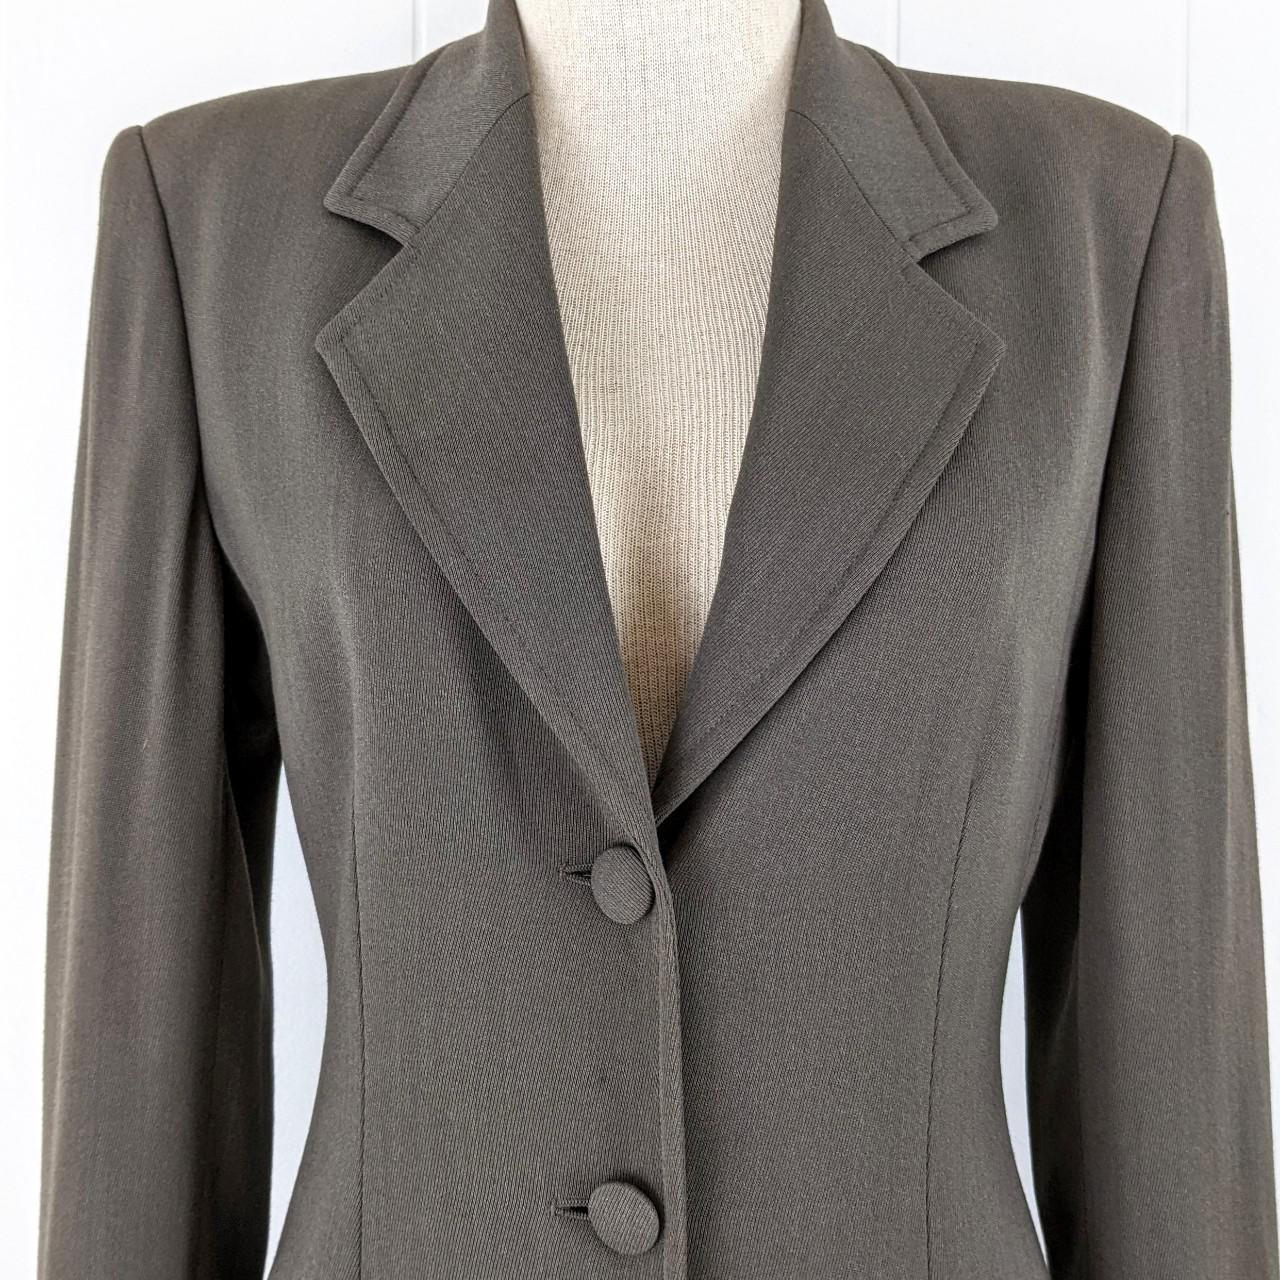 Product Image 2 - vintage 90's Emporio Armani blazer

brand: